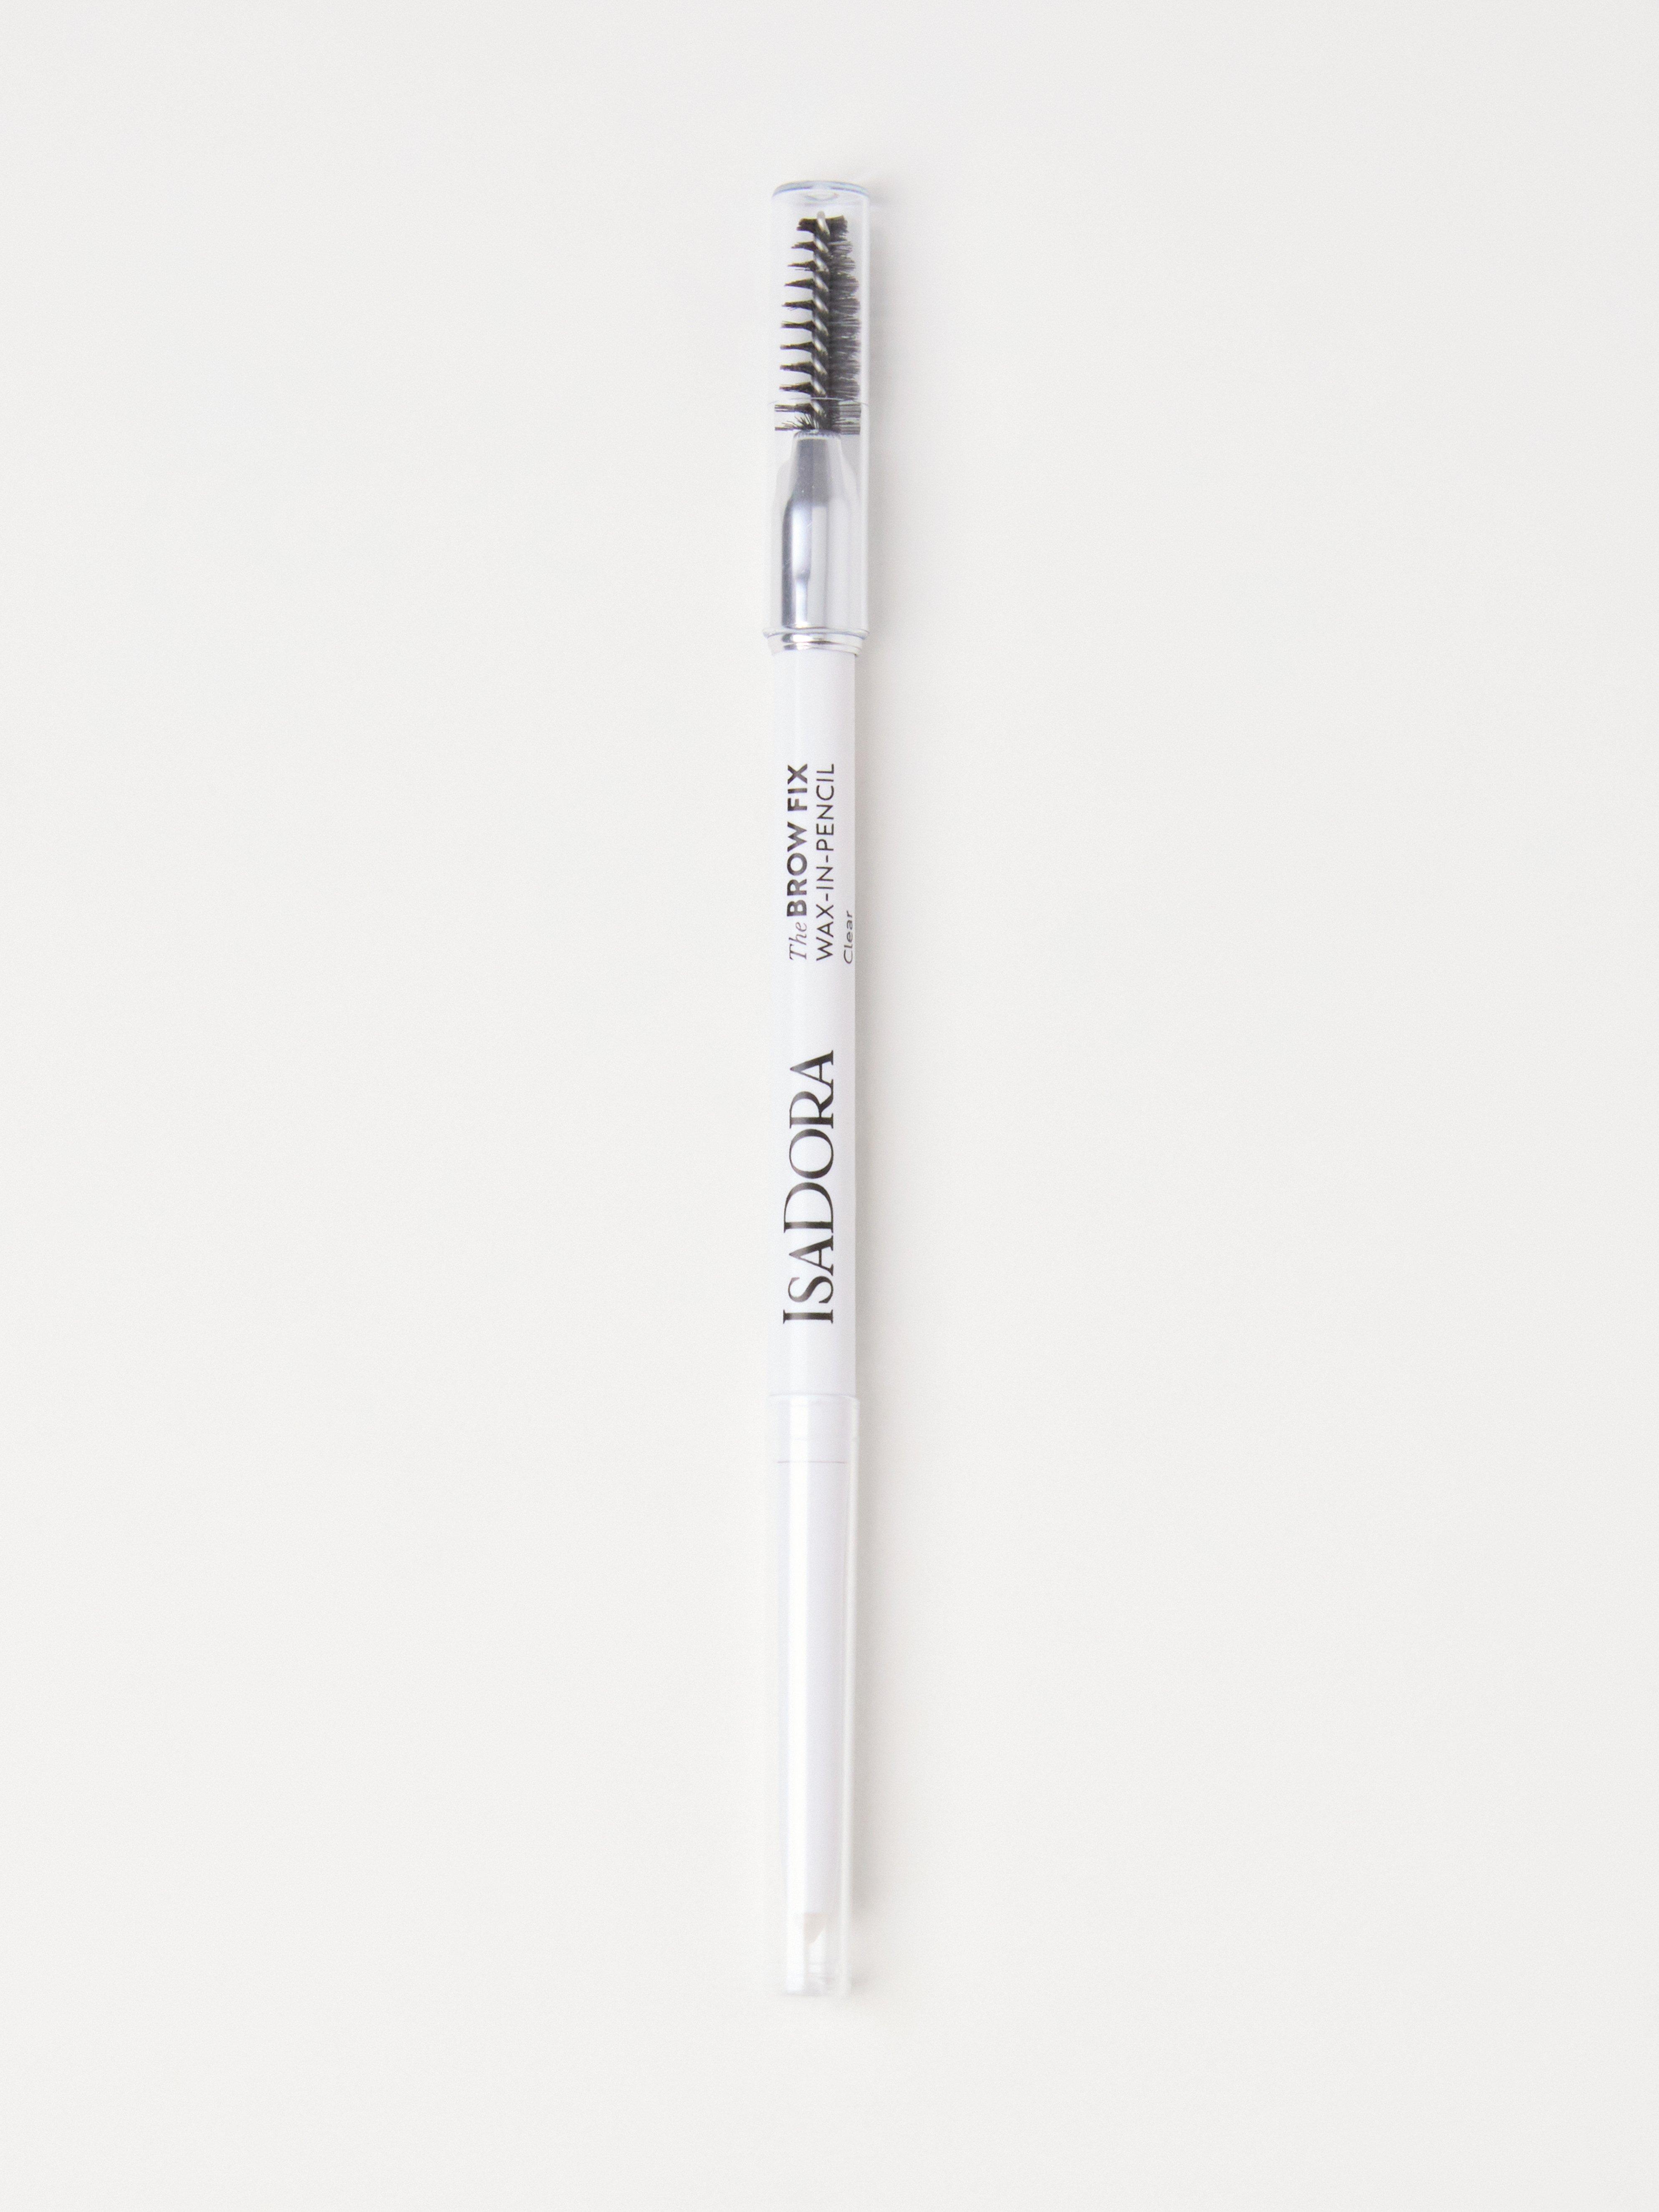 Lindex IsaDora Brow Fix Wax-in-pencil